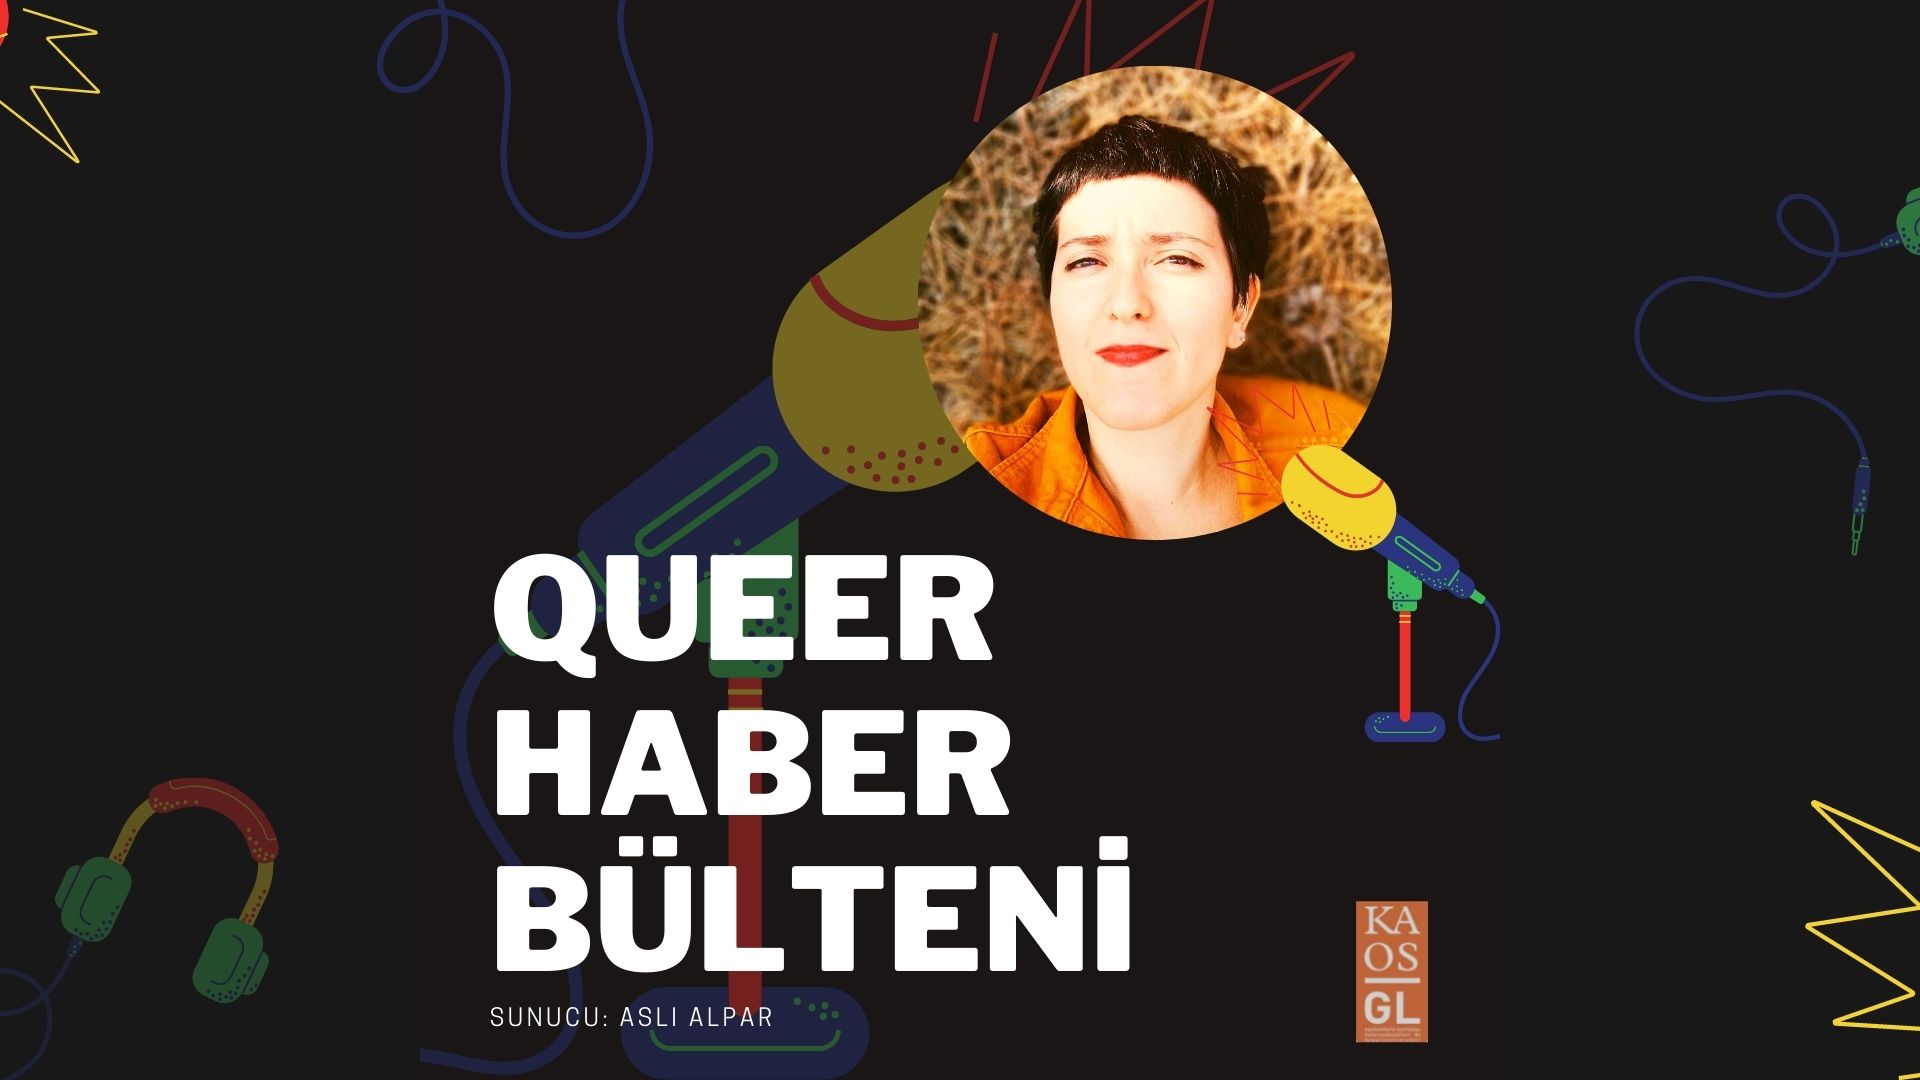 Podcast: Kasım ayı Queer Haber Bülteni | Kaos GL - LGBTİ+ Haber Portalı